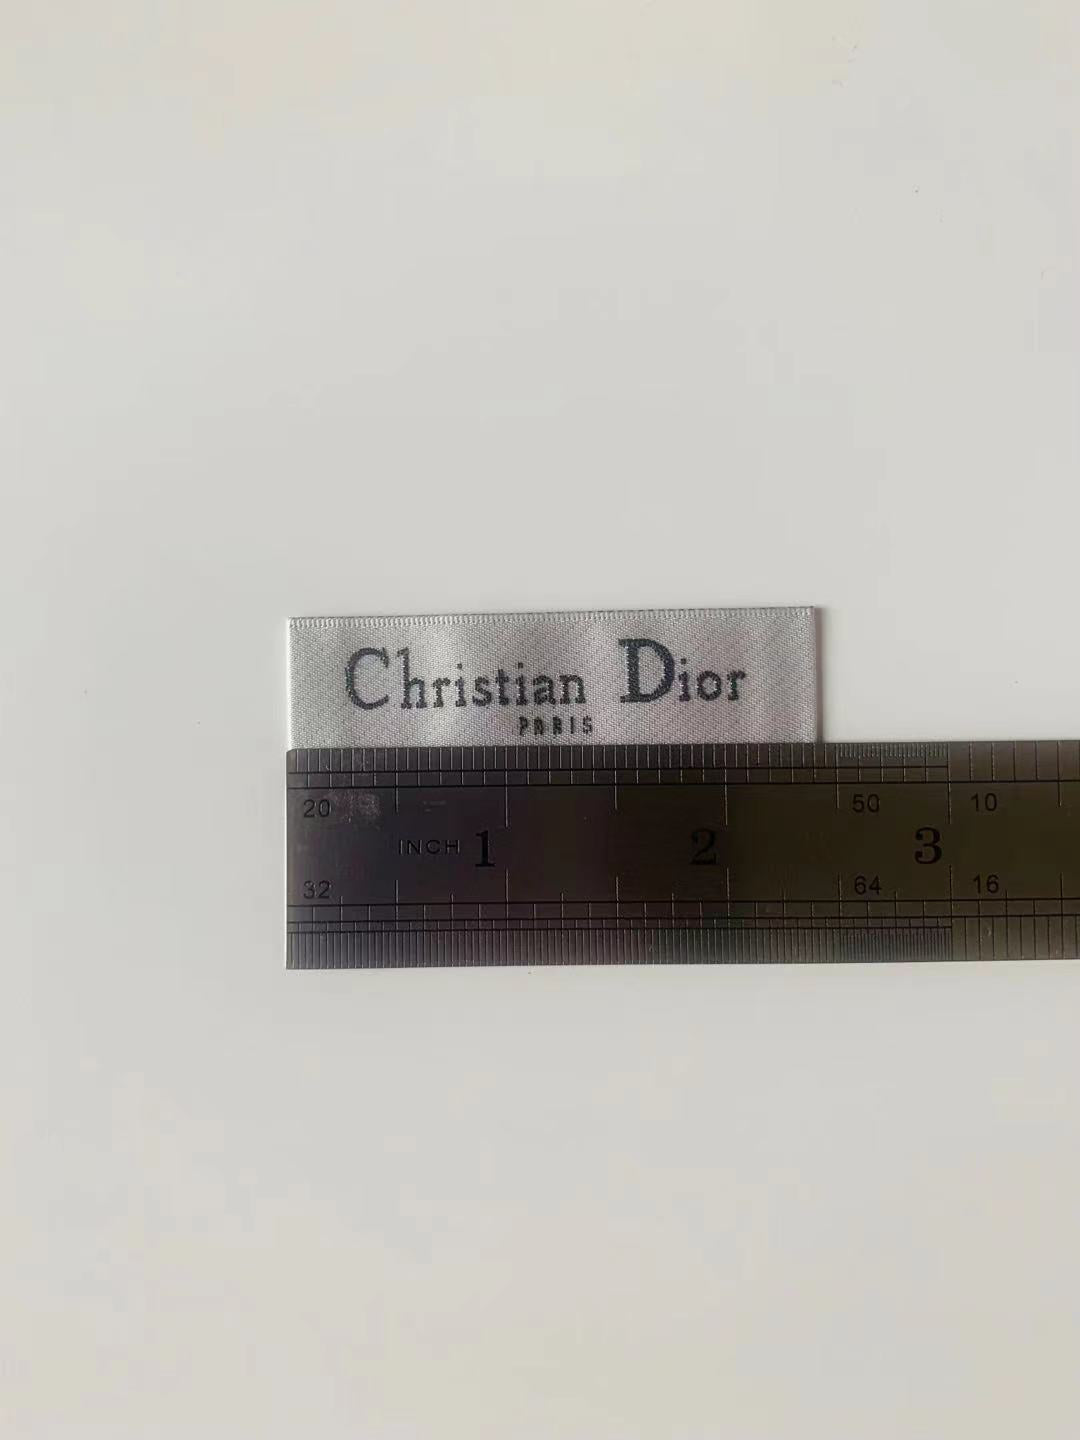 Classic Dior Label For Handmade Goods